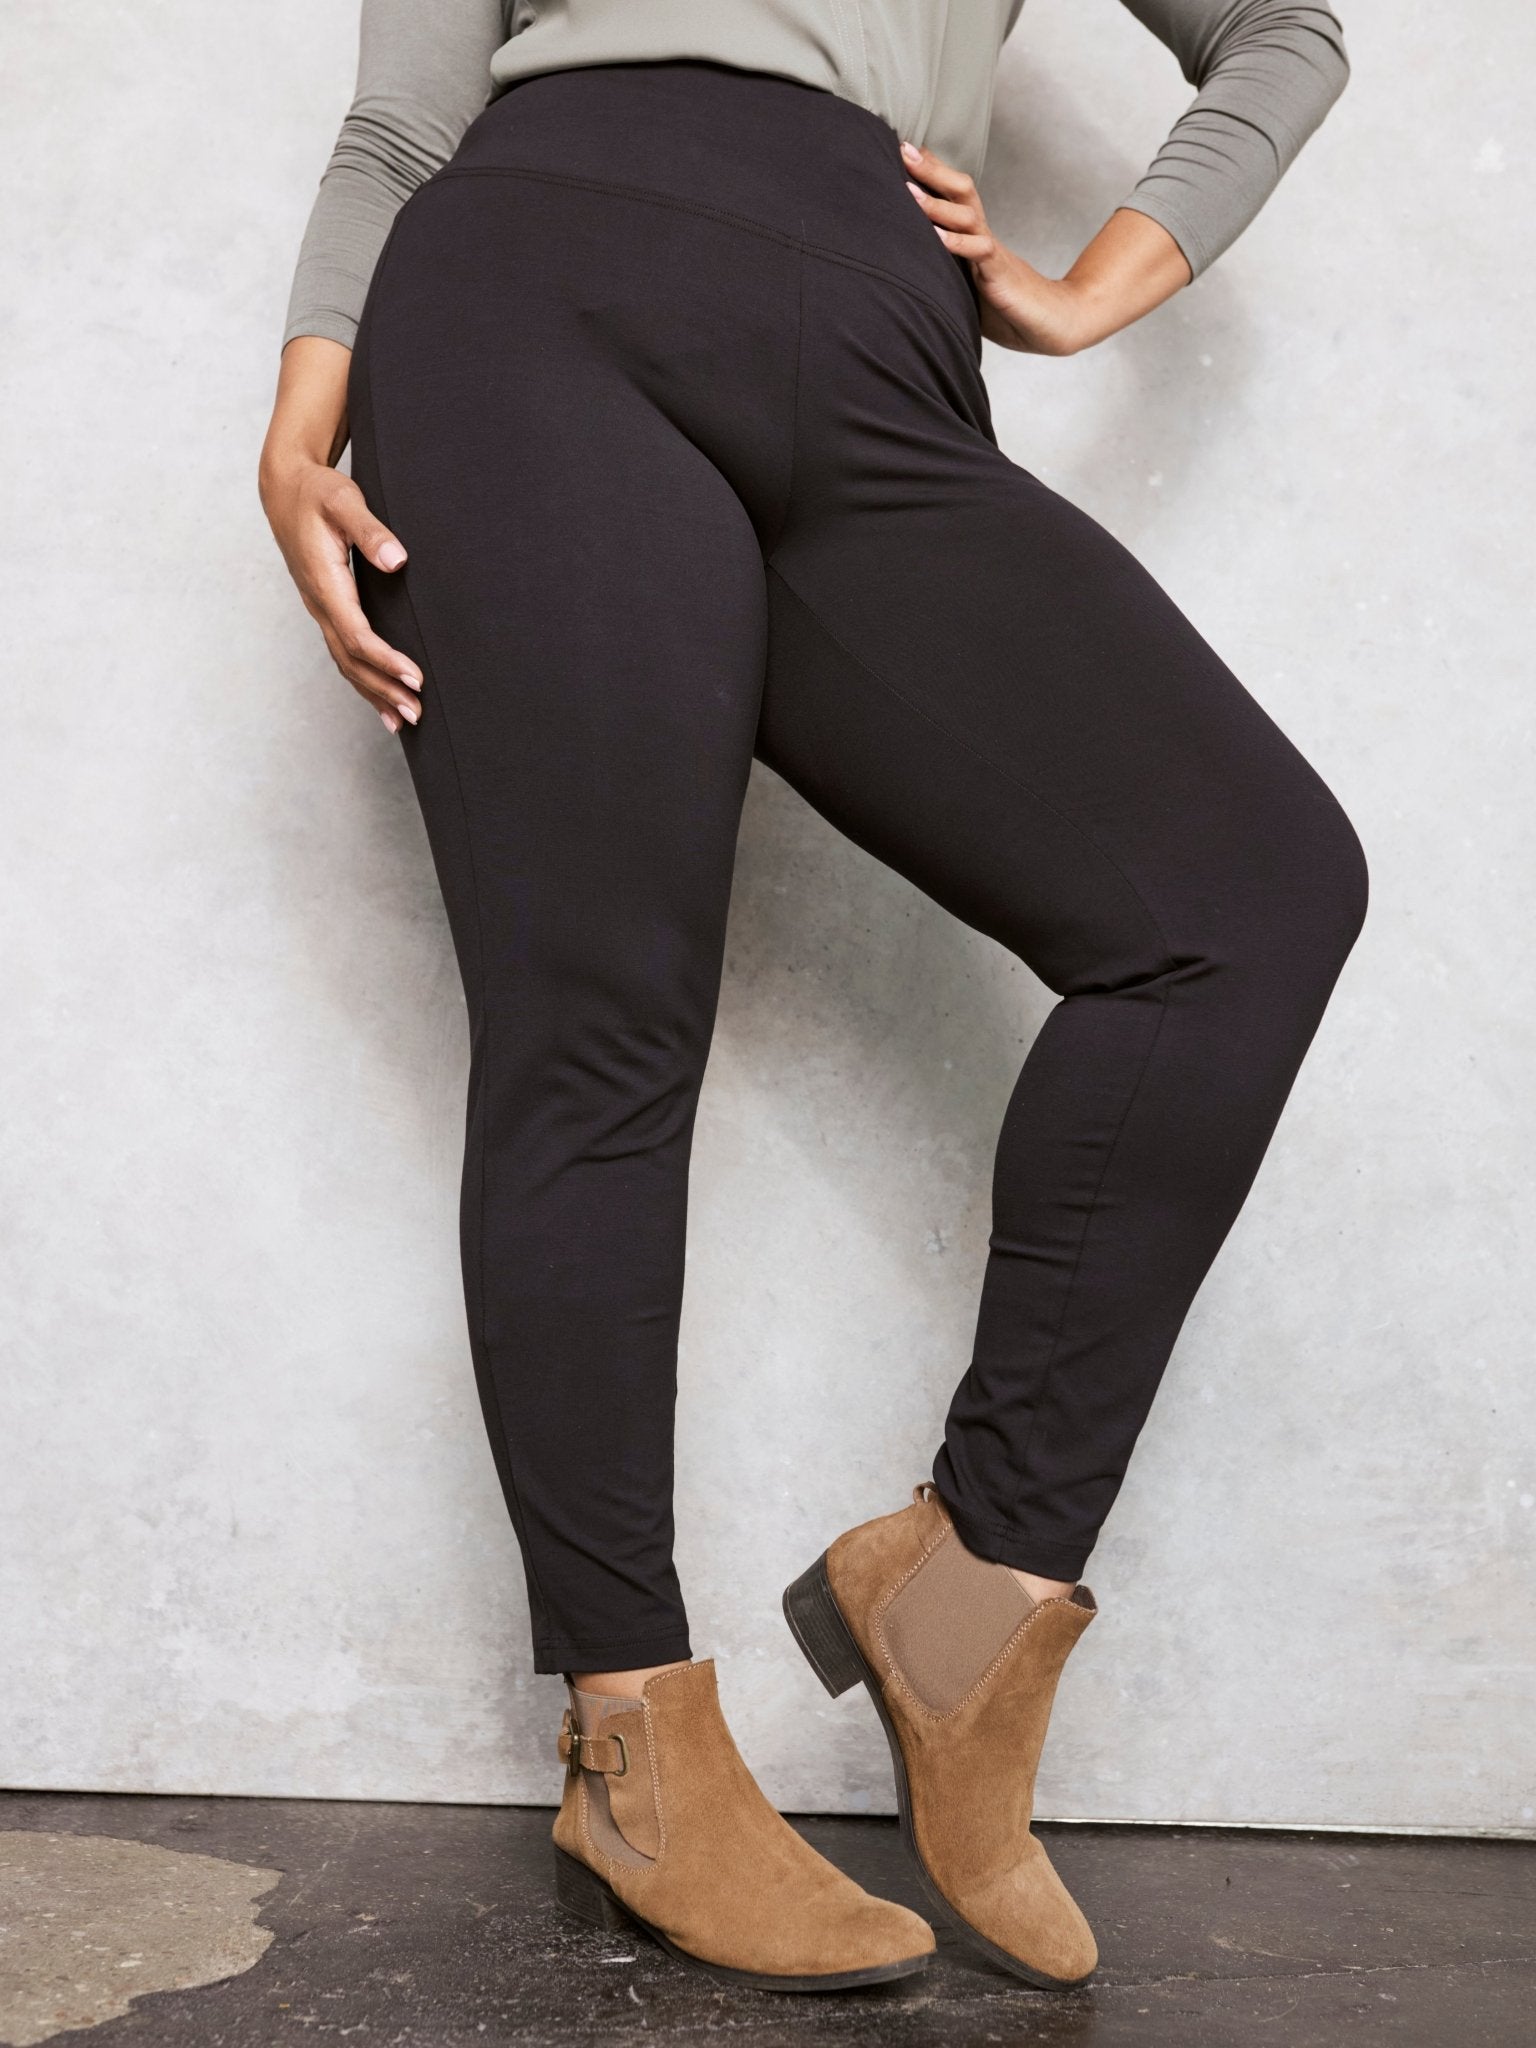 DressBarn Women's Soft and Comfortable Tummy Control Legging, Pima